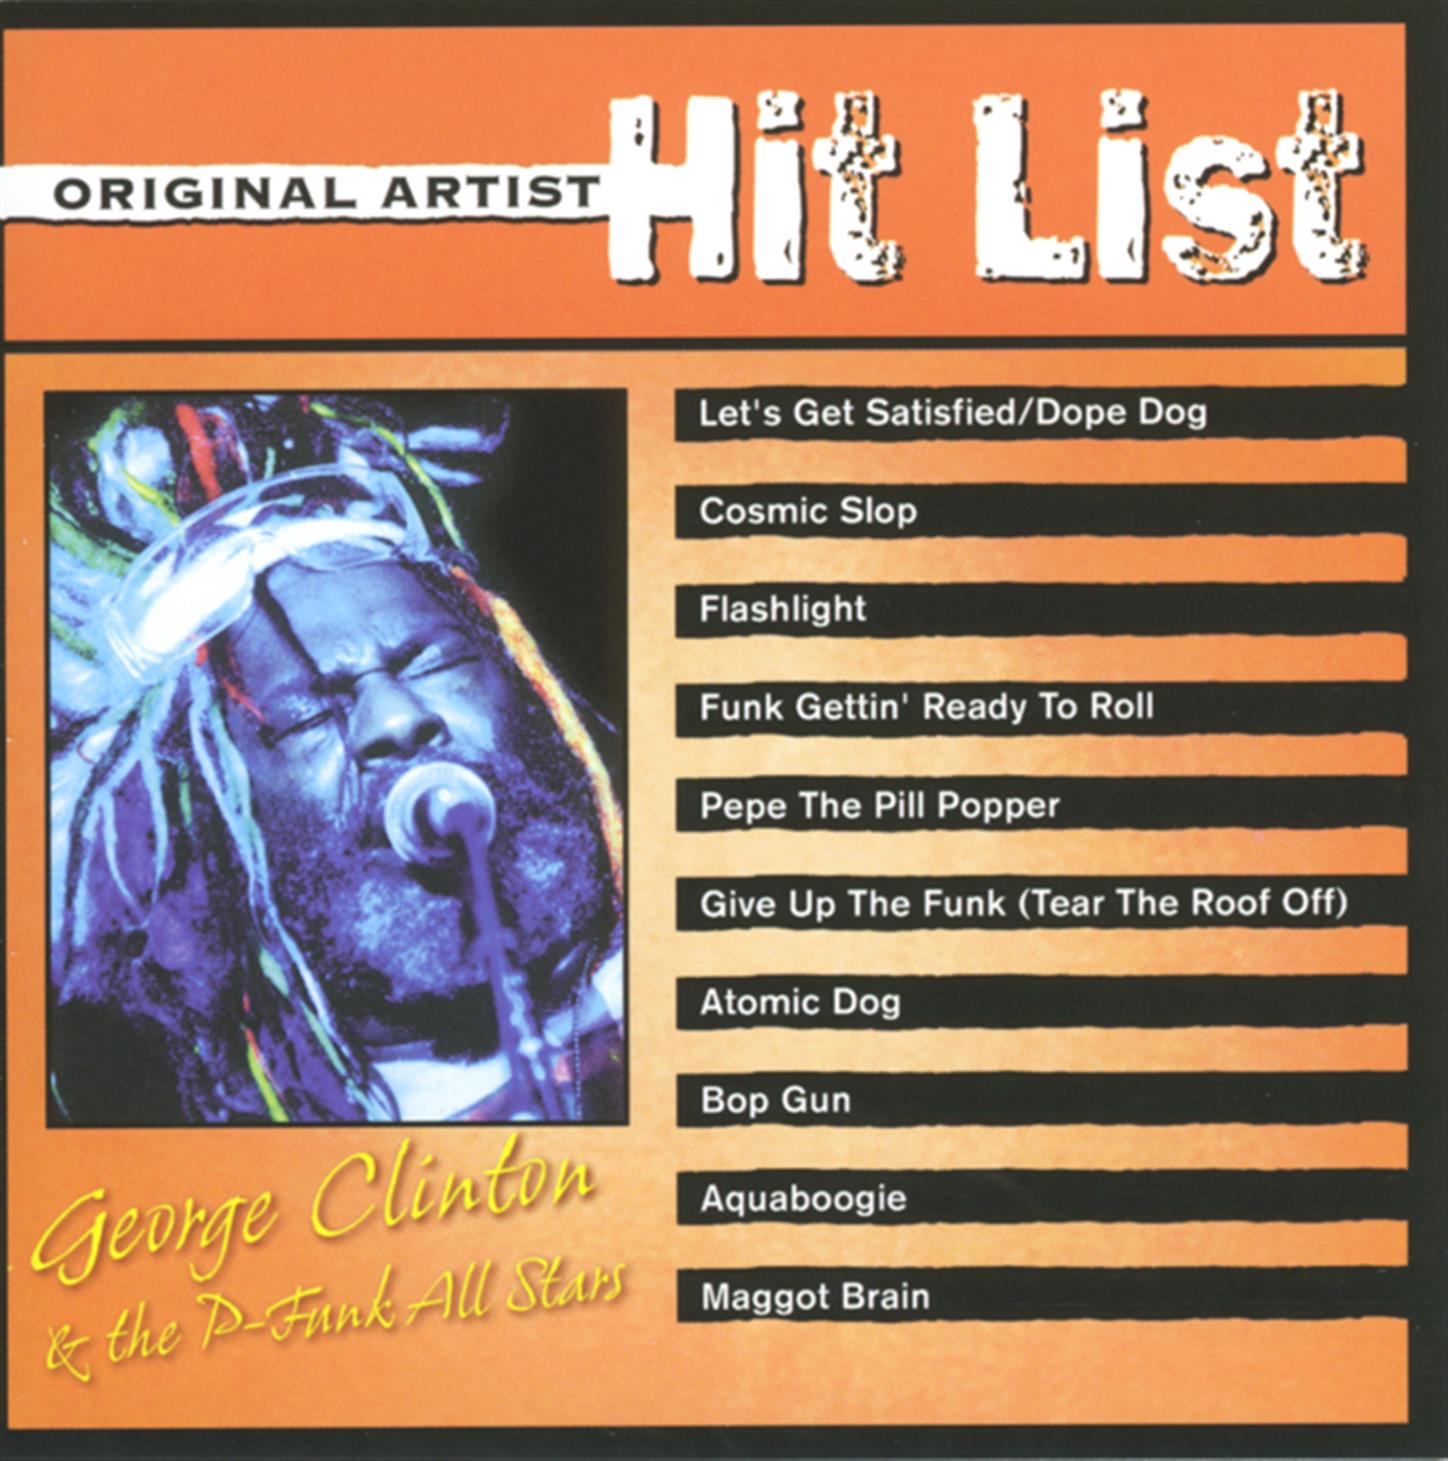 Original Artist Hit List: George Clinton & the P-Funk All Stars